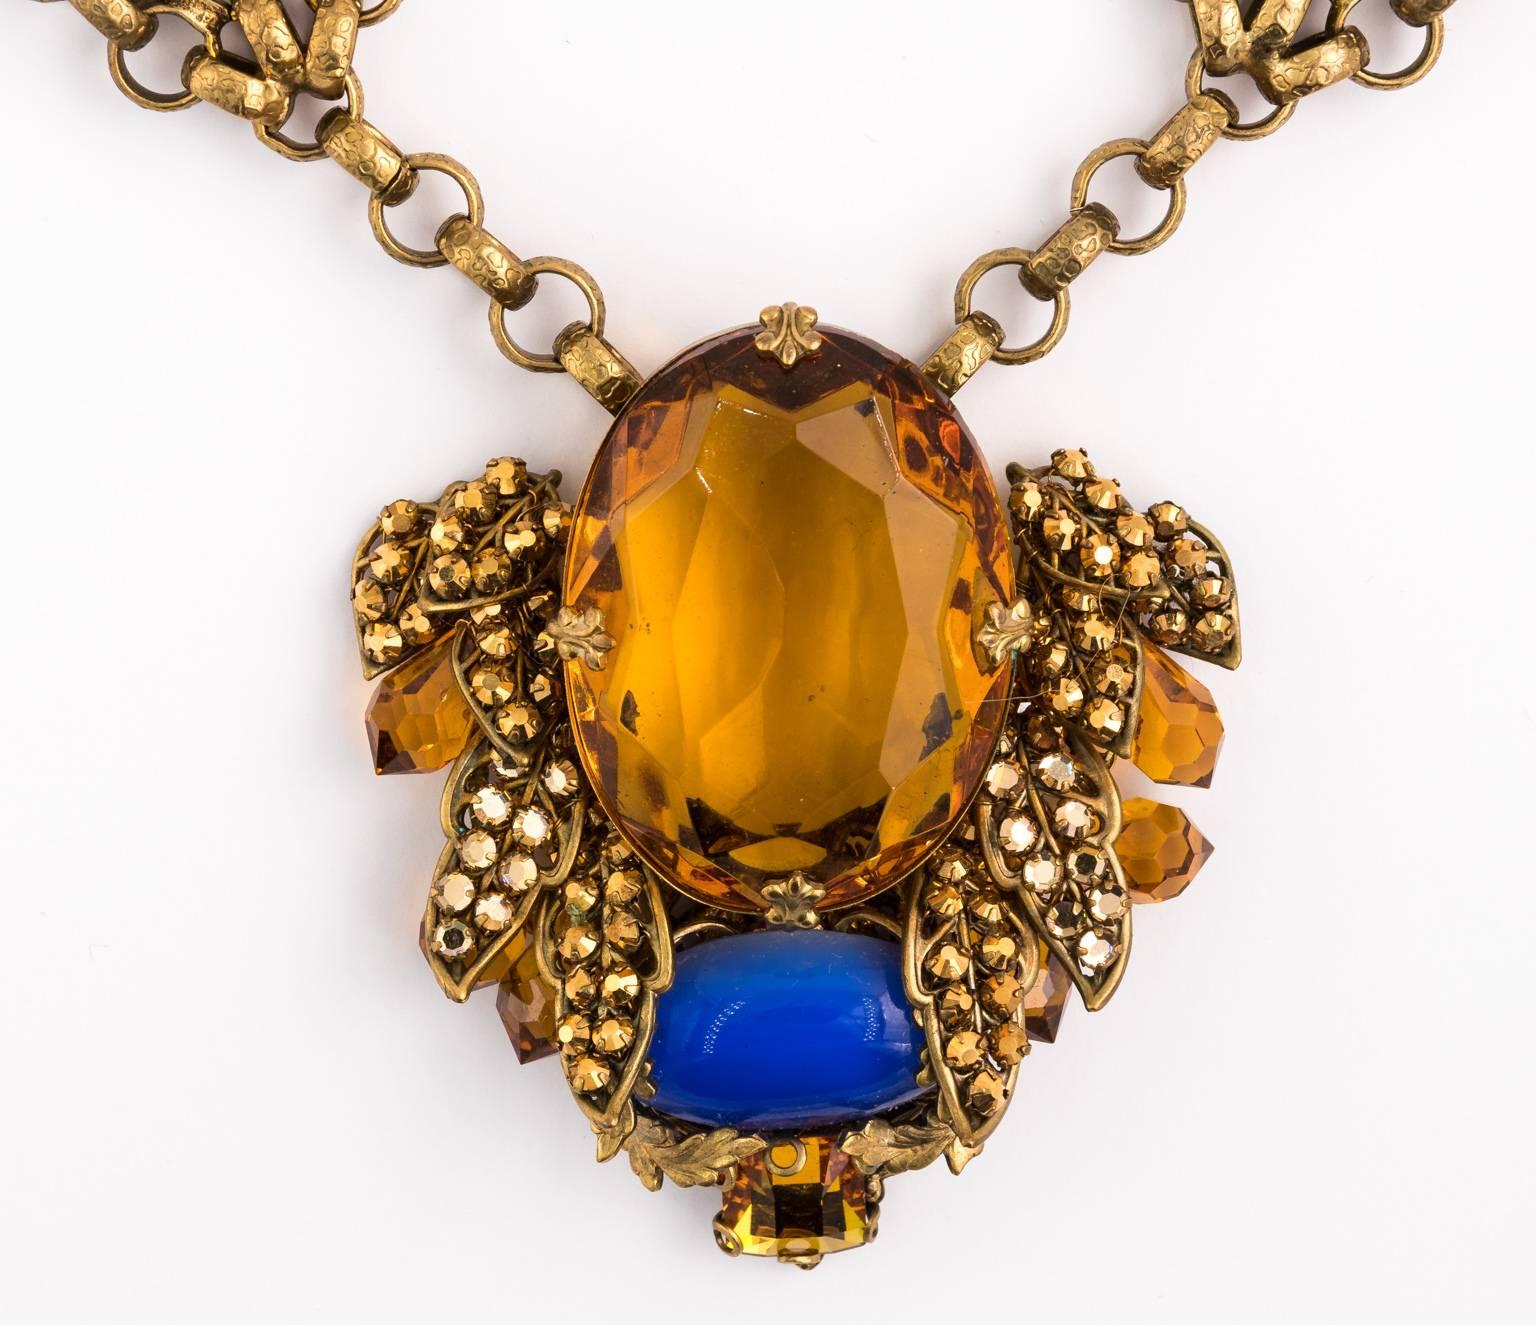 Bijoux Heart Necklace with Large Citrine Glass Centre Piece by Dita Von Teese 5